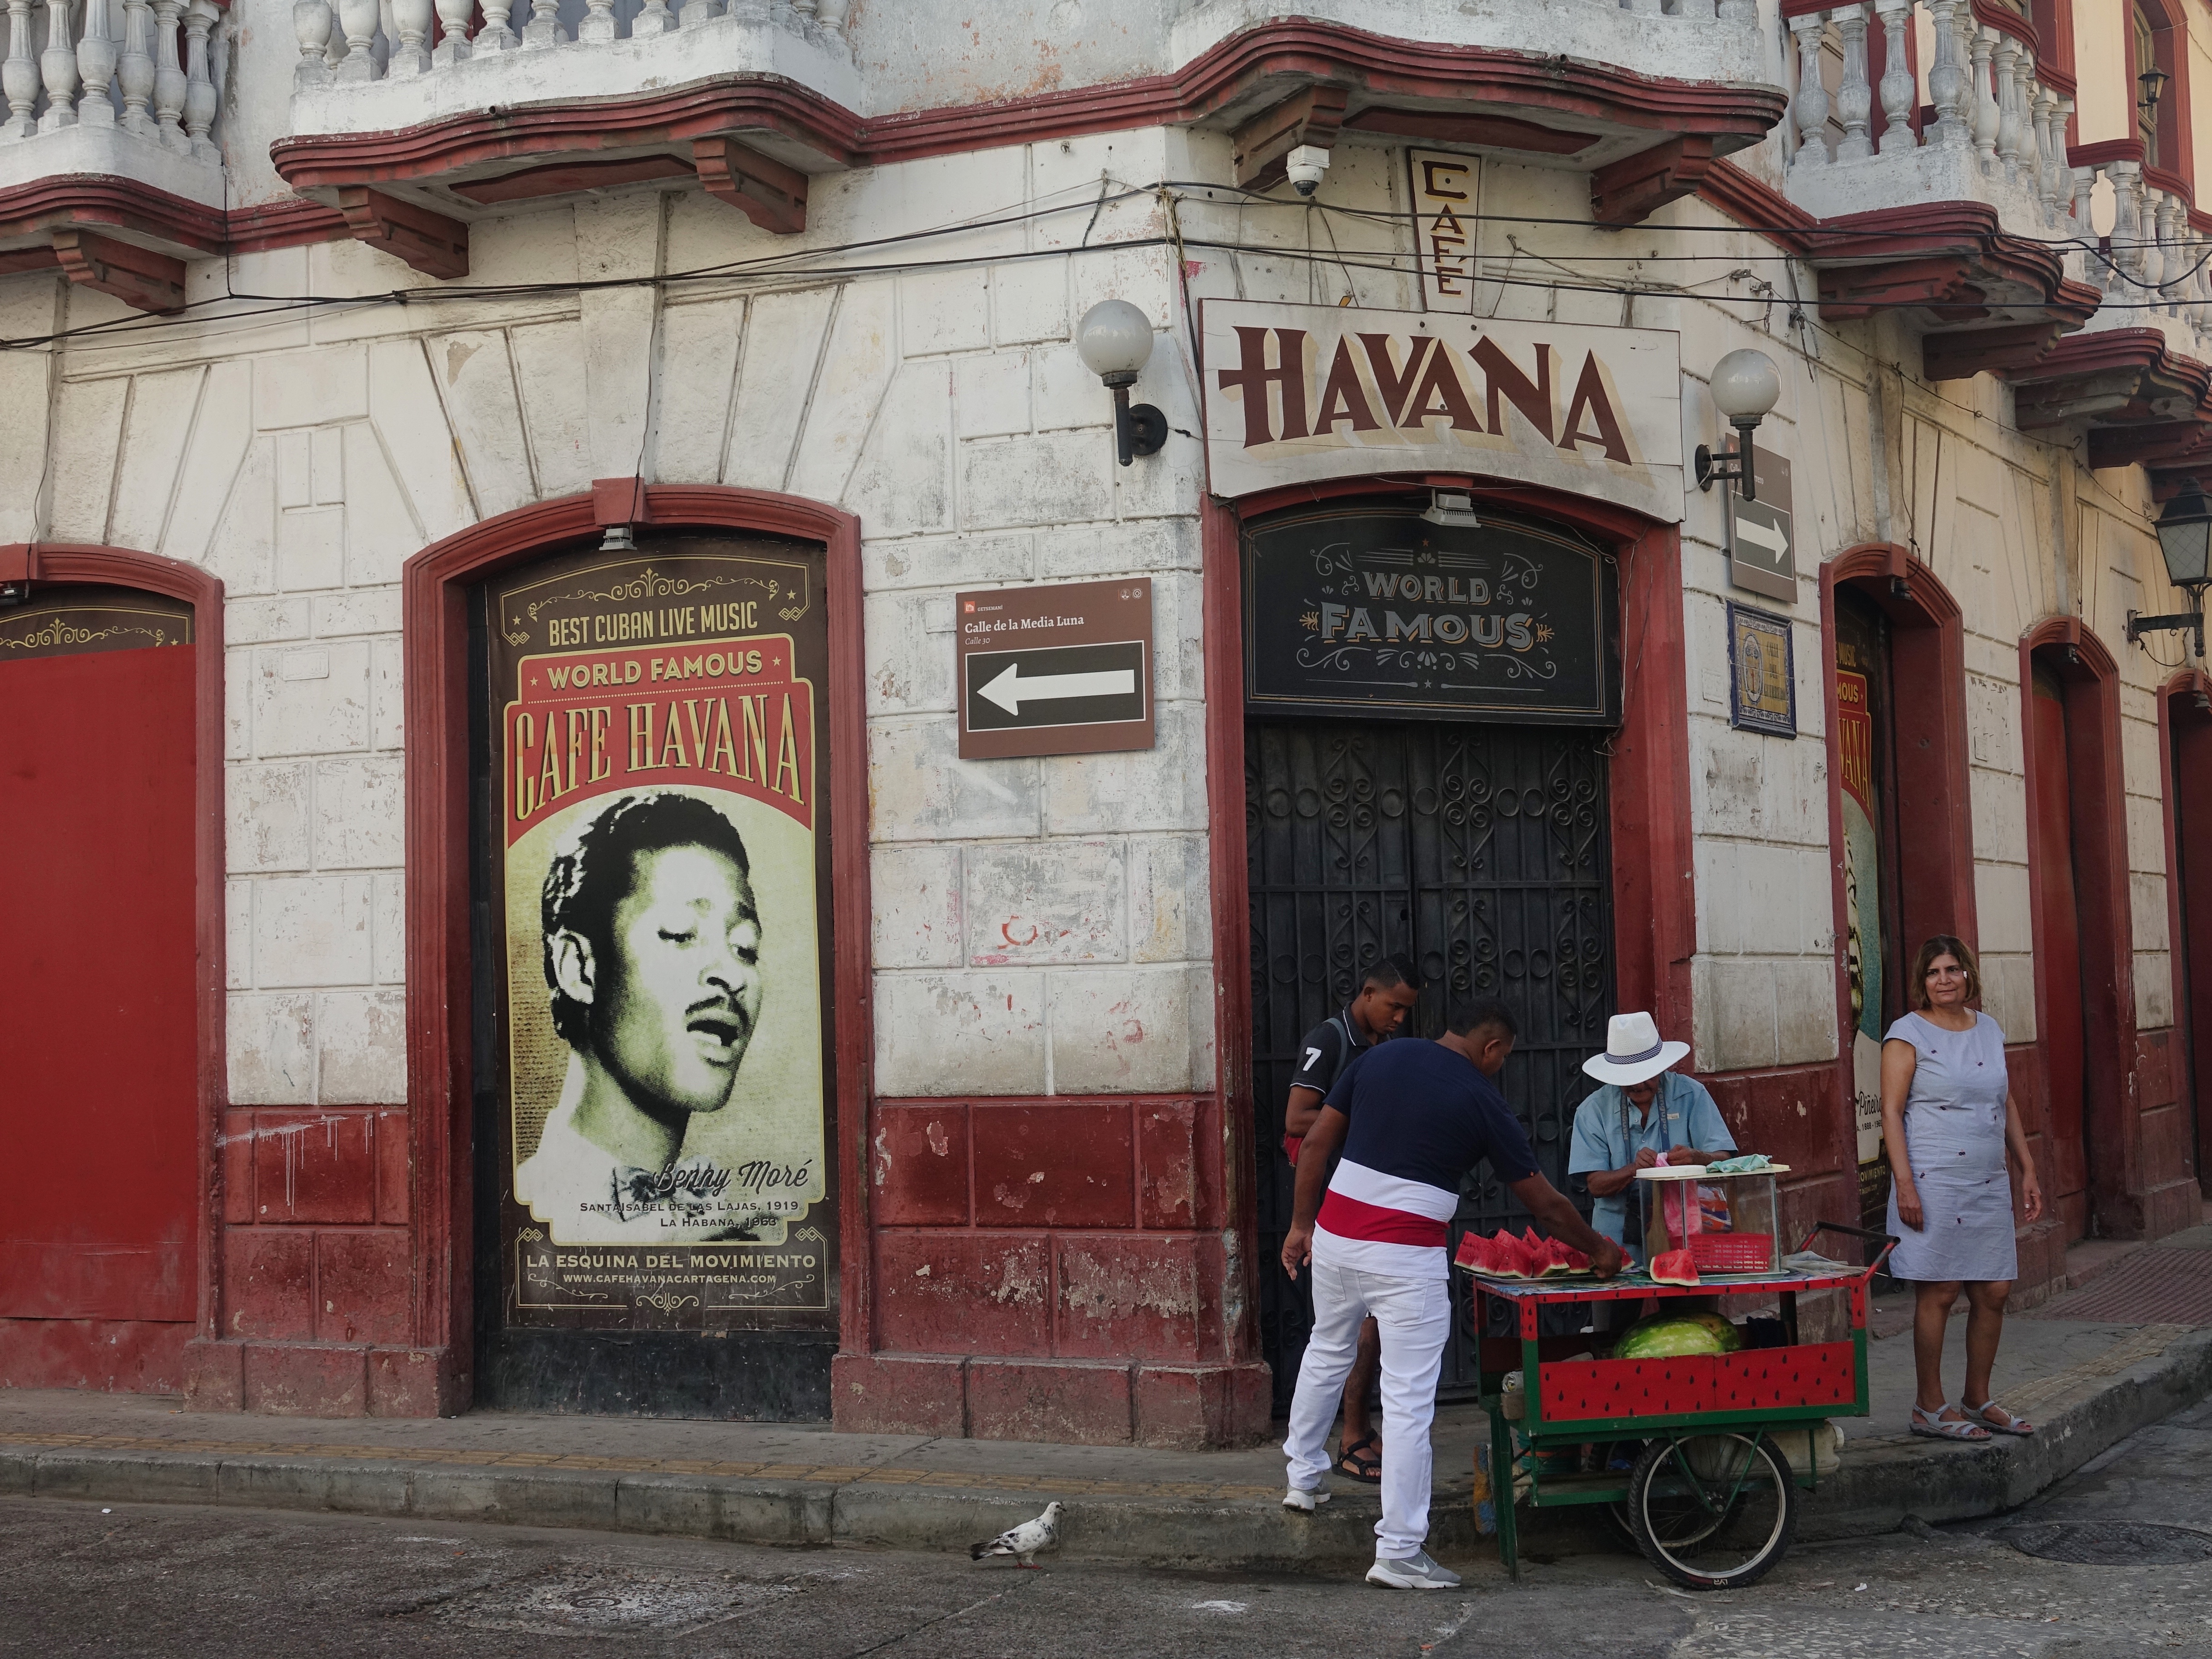 Café Havana is the most famous Salsa dance club in Cartagena